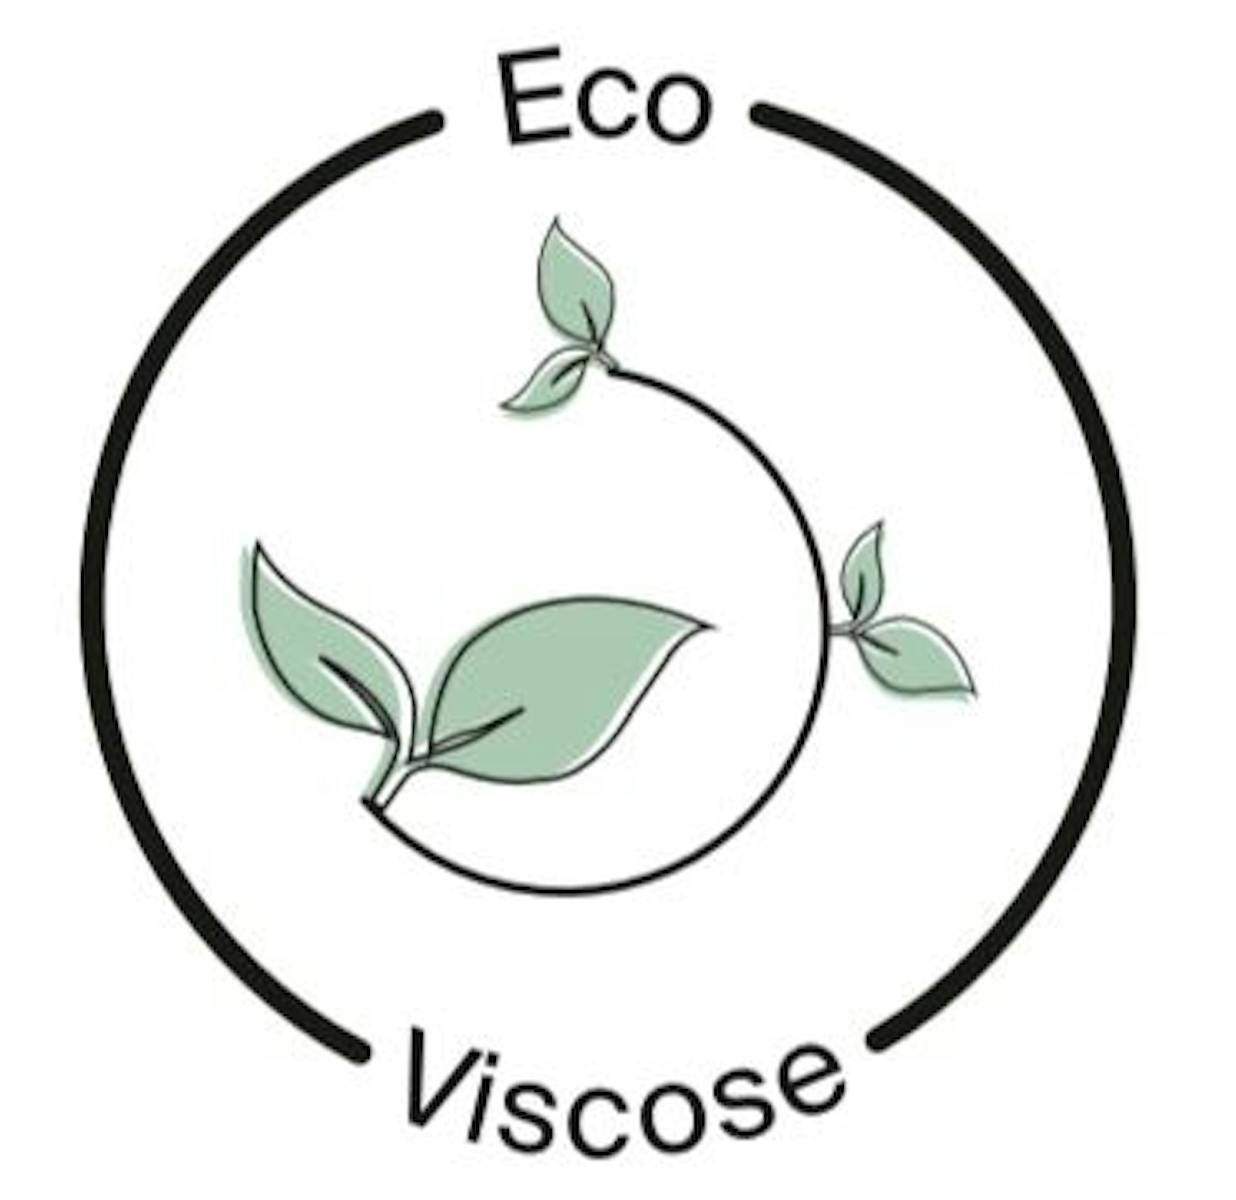 Eco Viscose certification